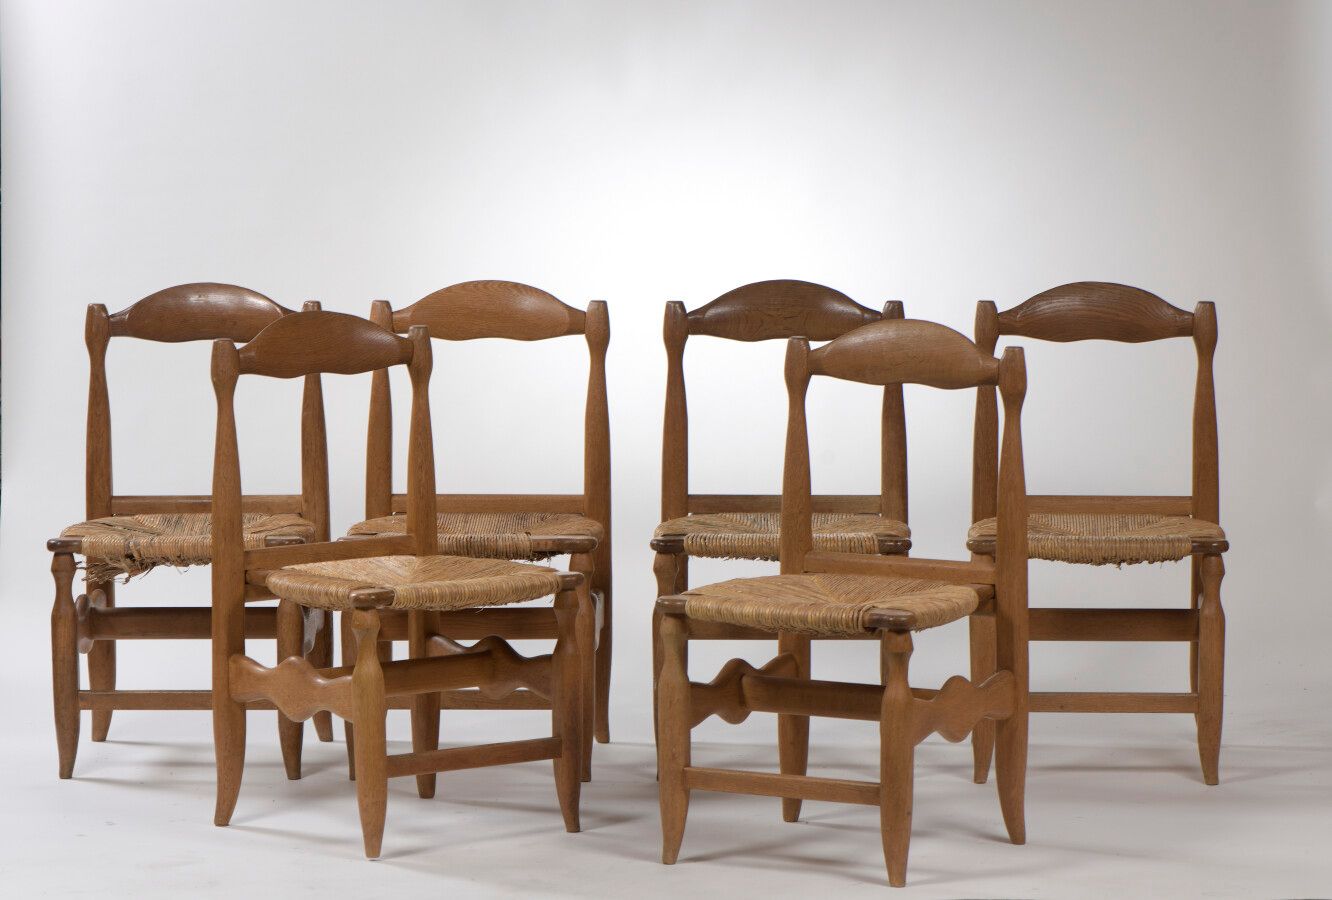 Null 罗伯特-吉耶尔梅（1913-1990）和雅克-尚布隆（1914-2001）。

1960年的 "Votre Maison "版

一套六把草编椅子

&hellip;